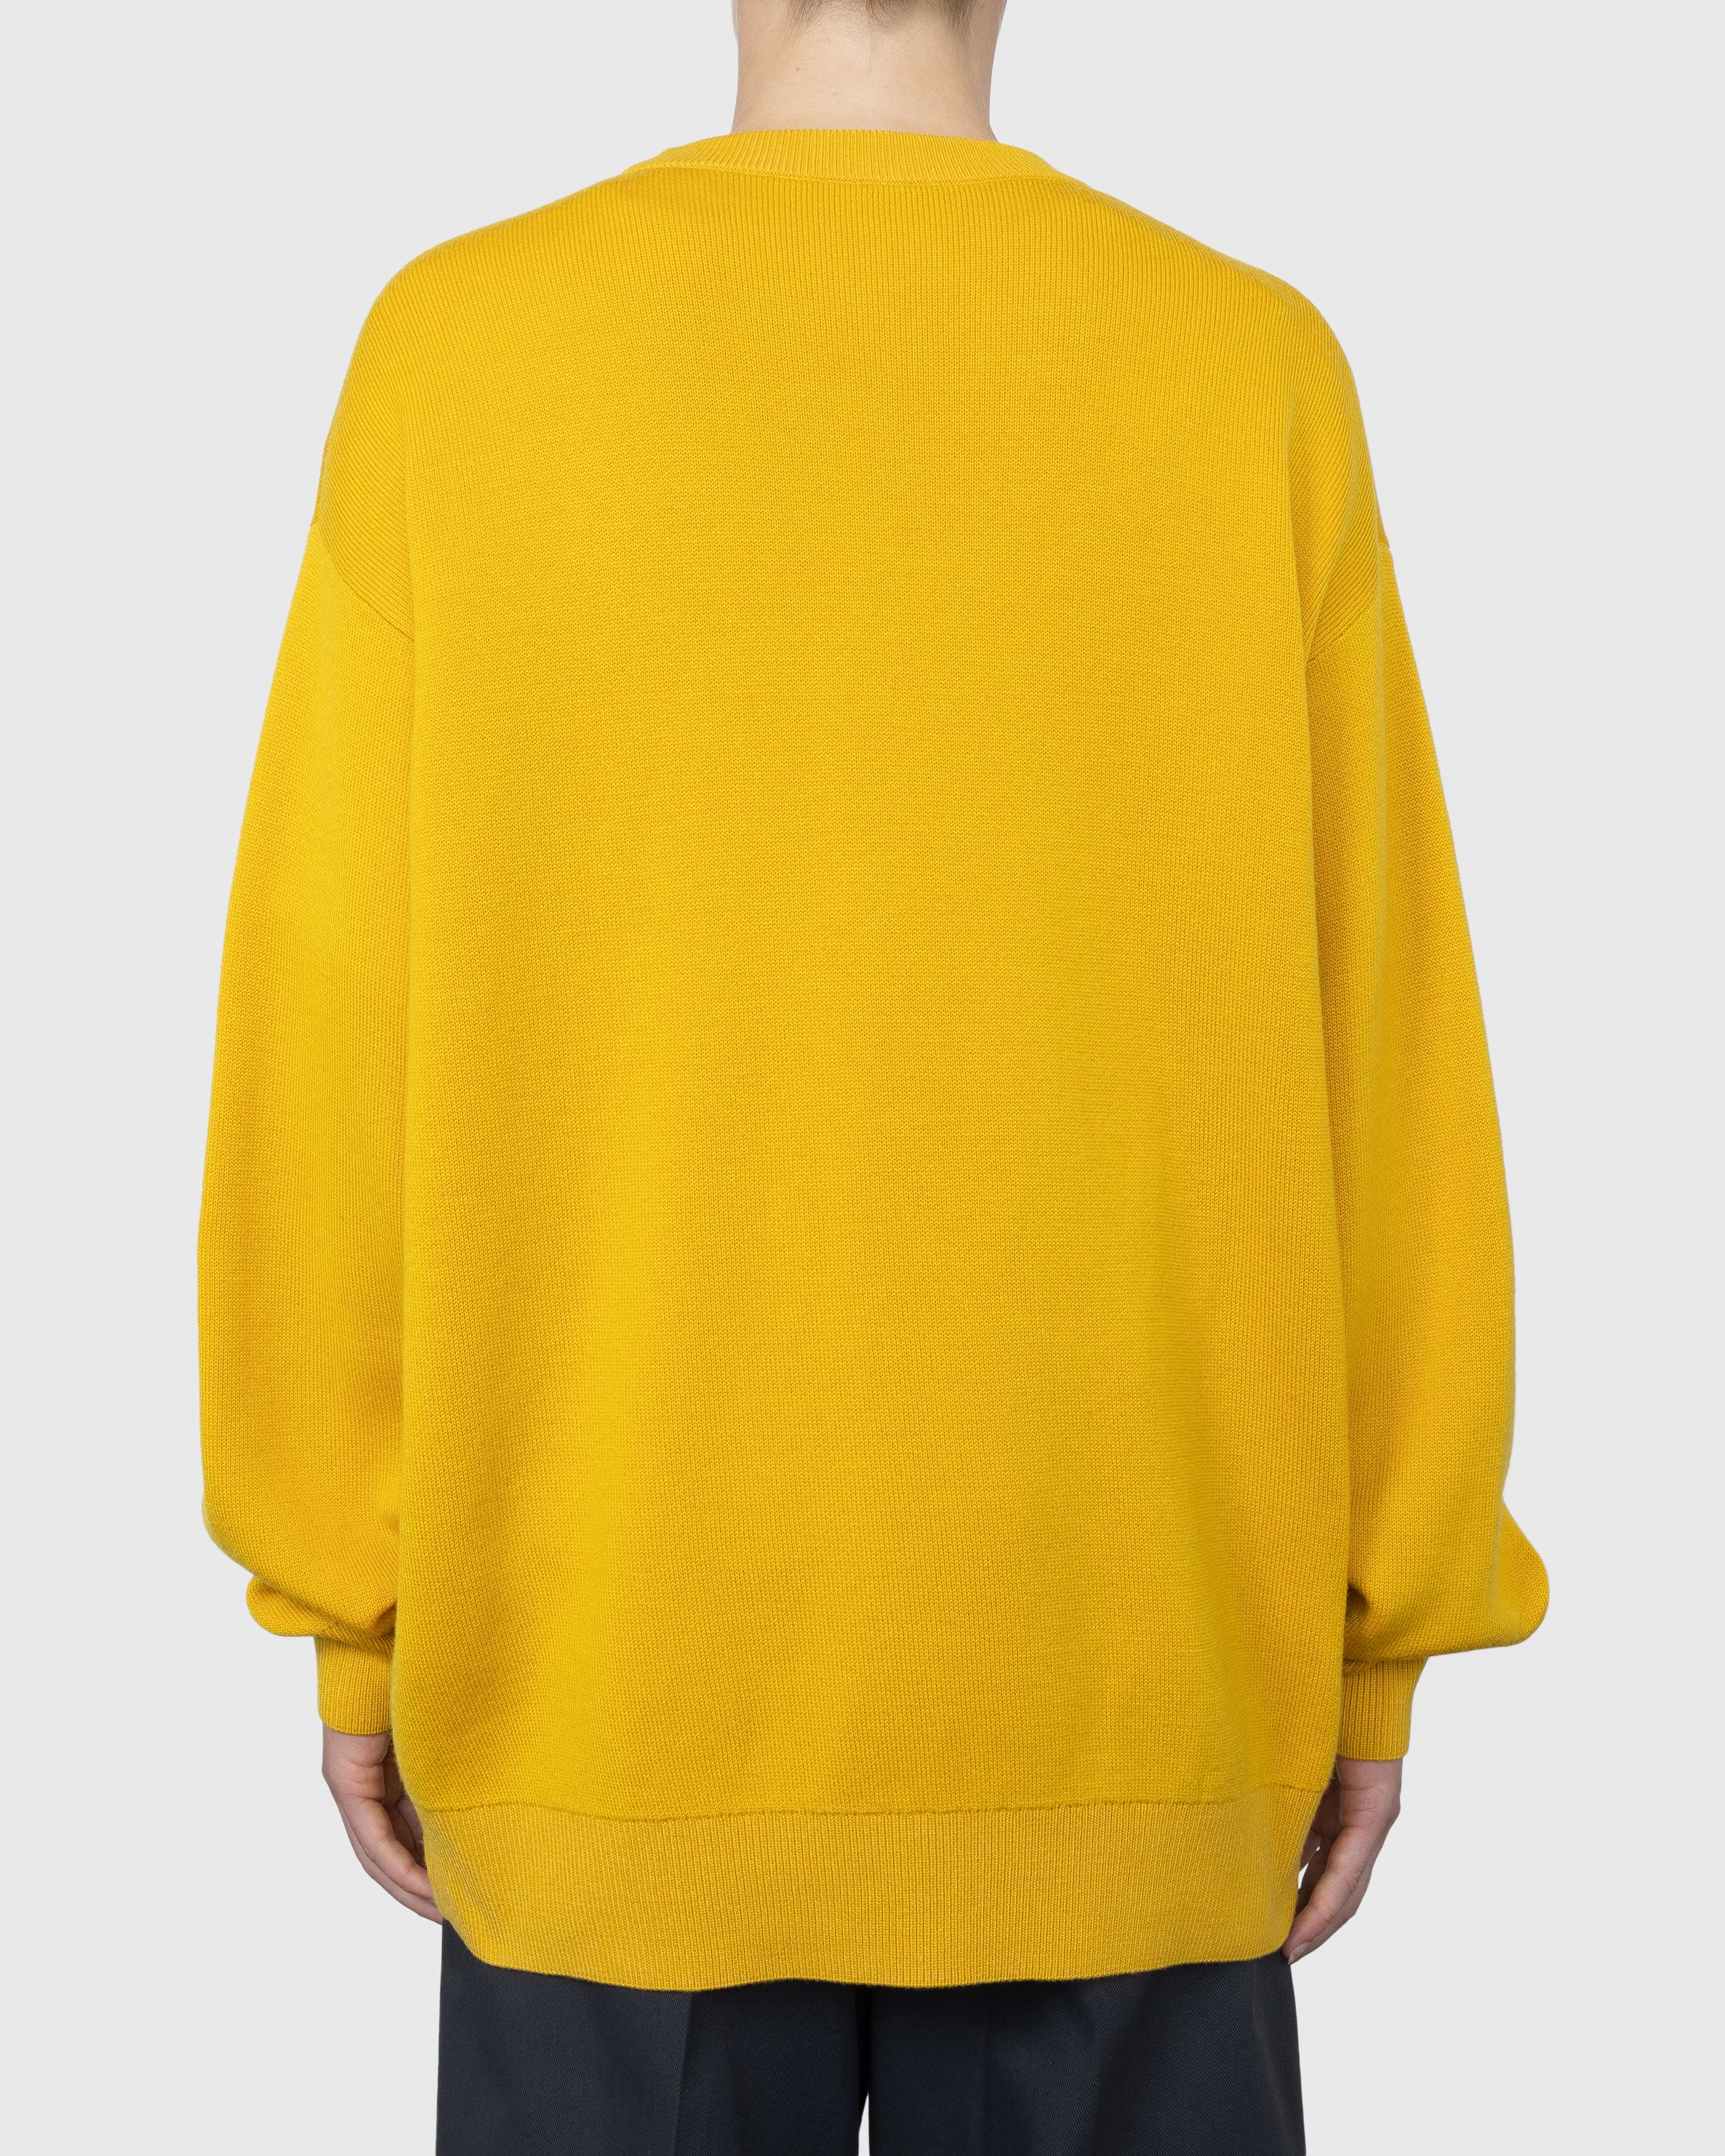 Acne Studios - Merino Wool Crewneck Sweater Yellow - Clothing - Yellow - Image 4